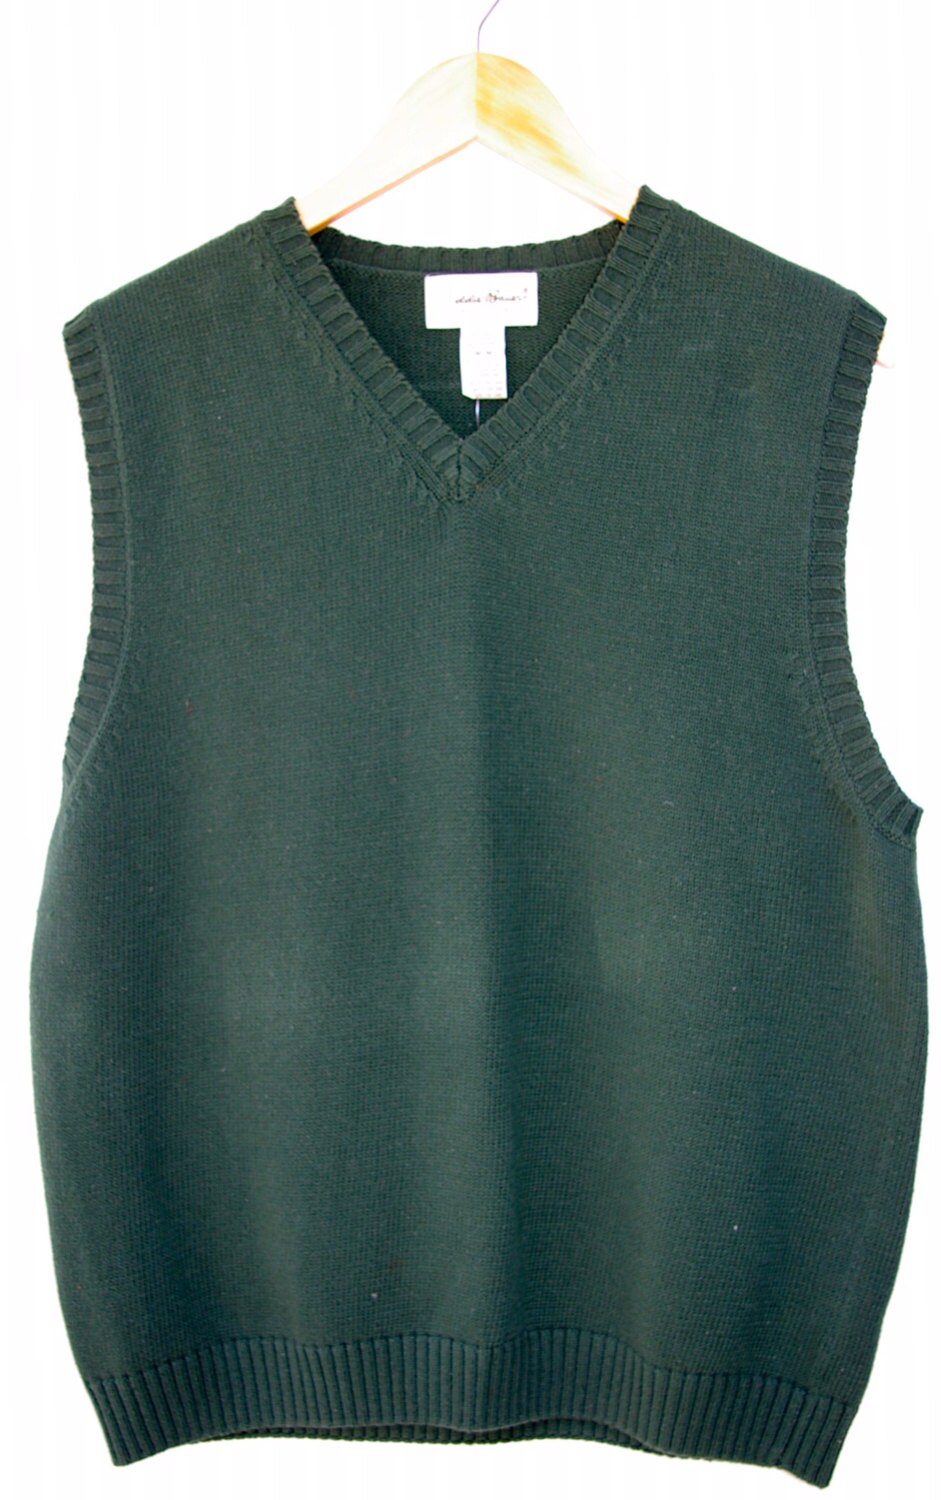 Men's Eddie Bauer Sweater Vest by BlackFlamingoLA on Etsy